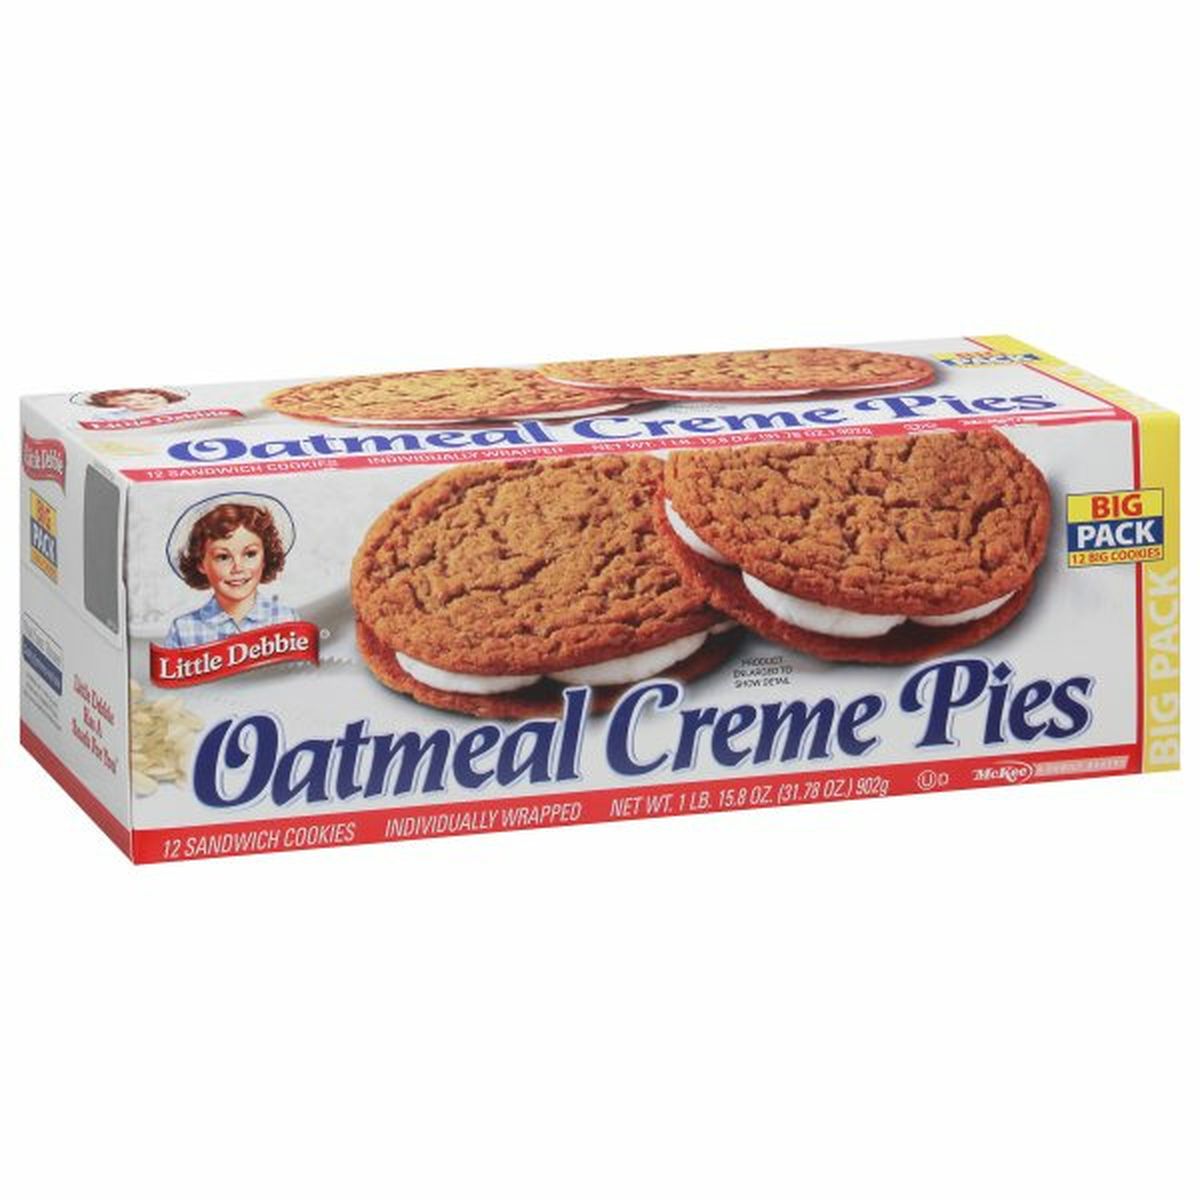 Calories in Little Debbie Sandwich Cookies, Oatmeal Creme Pies, Big Pack